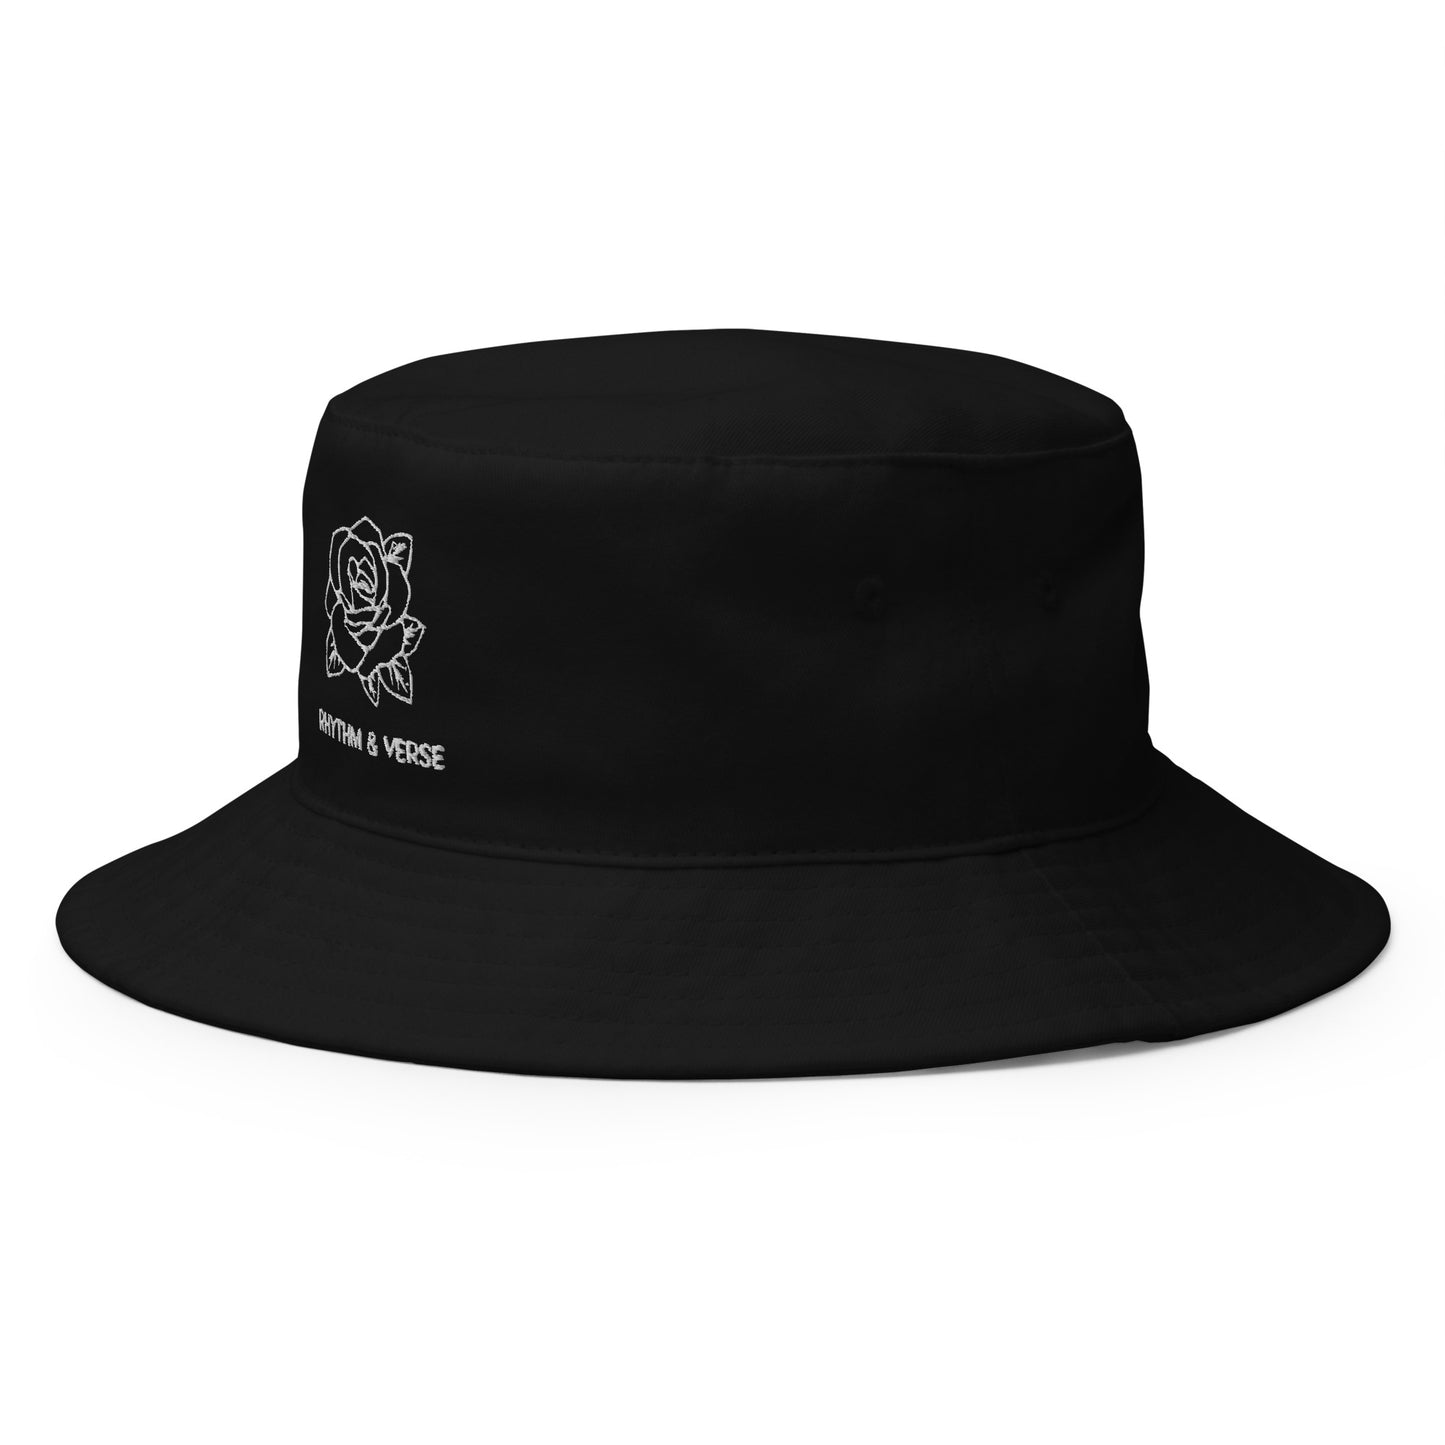 Rhythm & Verse Bucket Hat